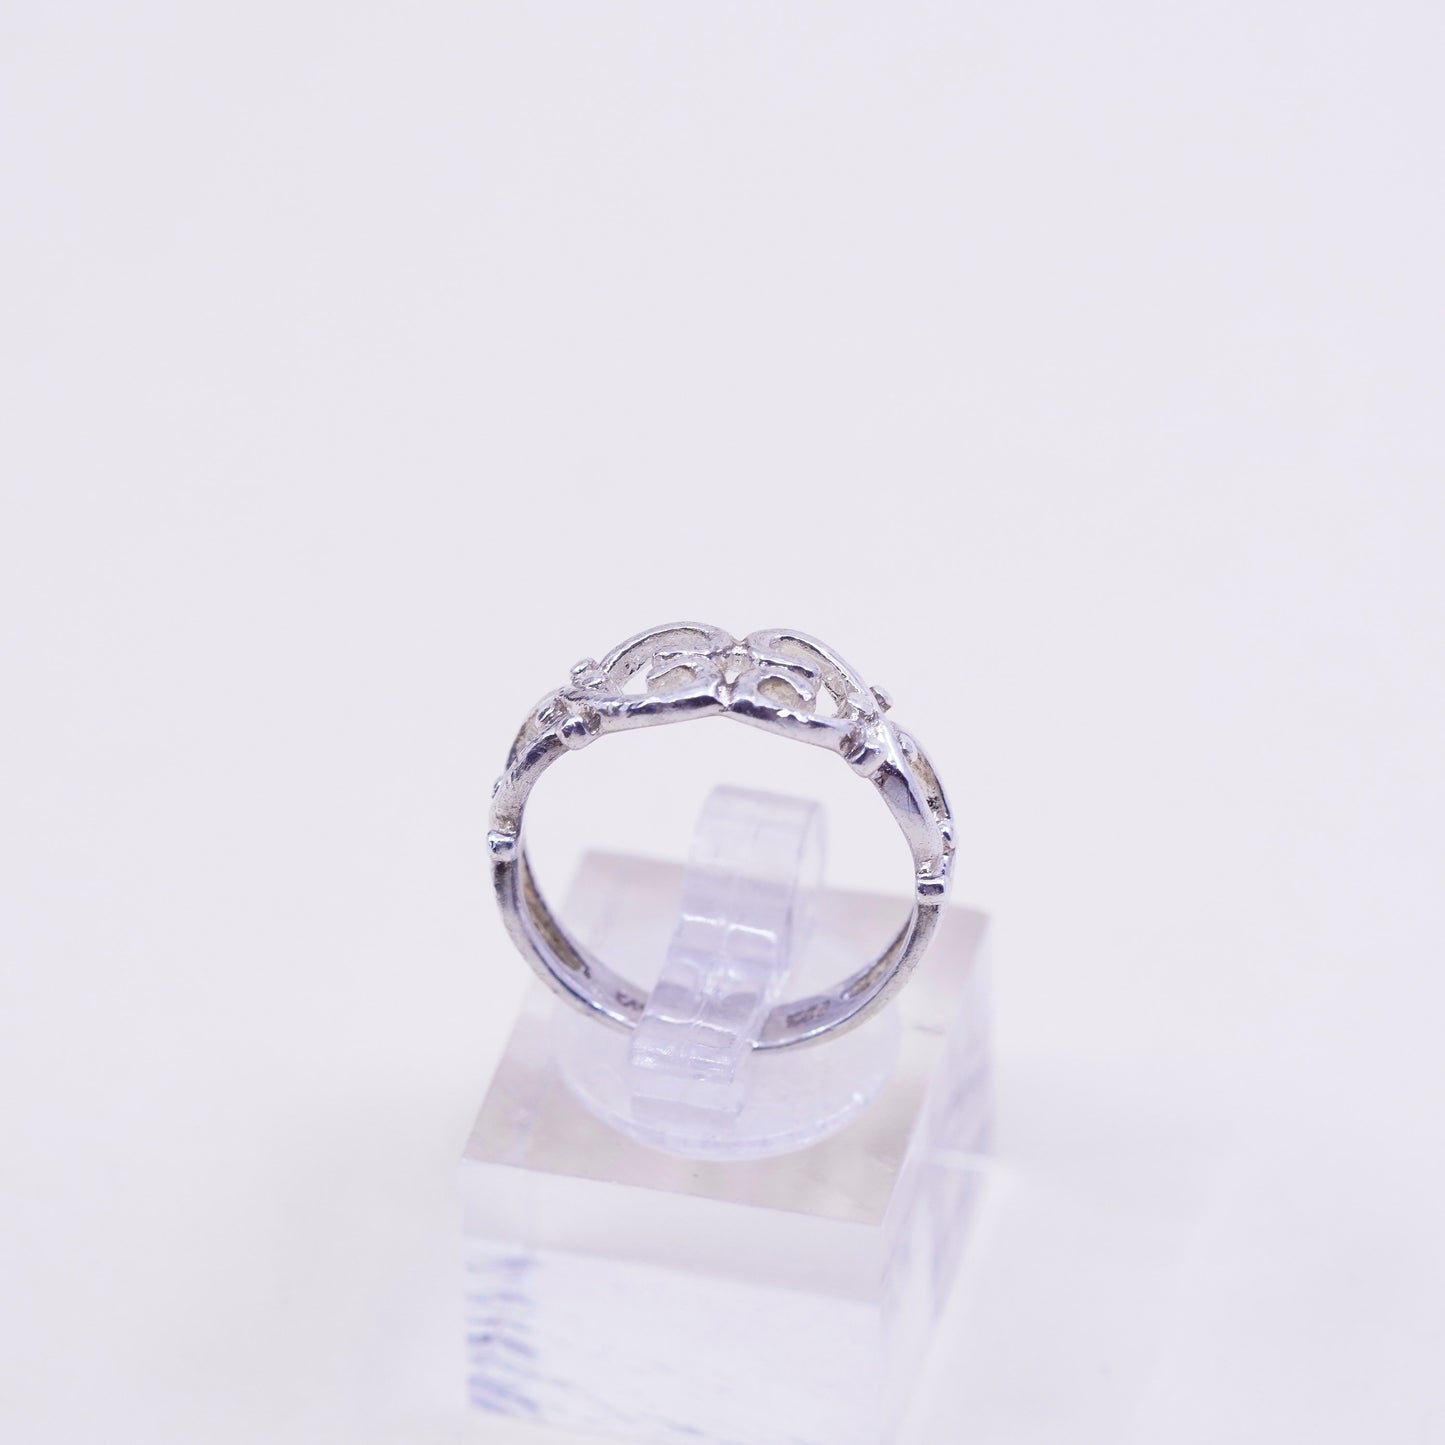 Size 6.75, vintage sterling silver handmade ring, filigree 925 band